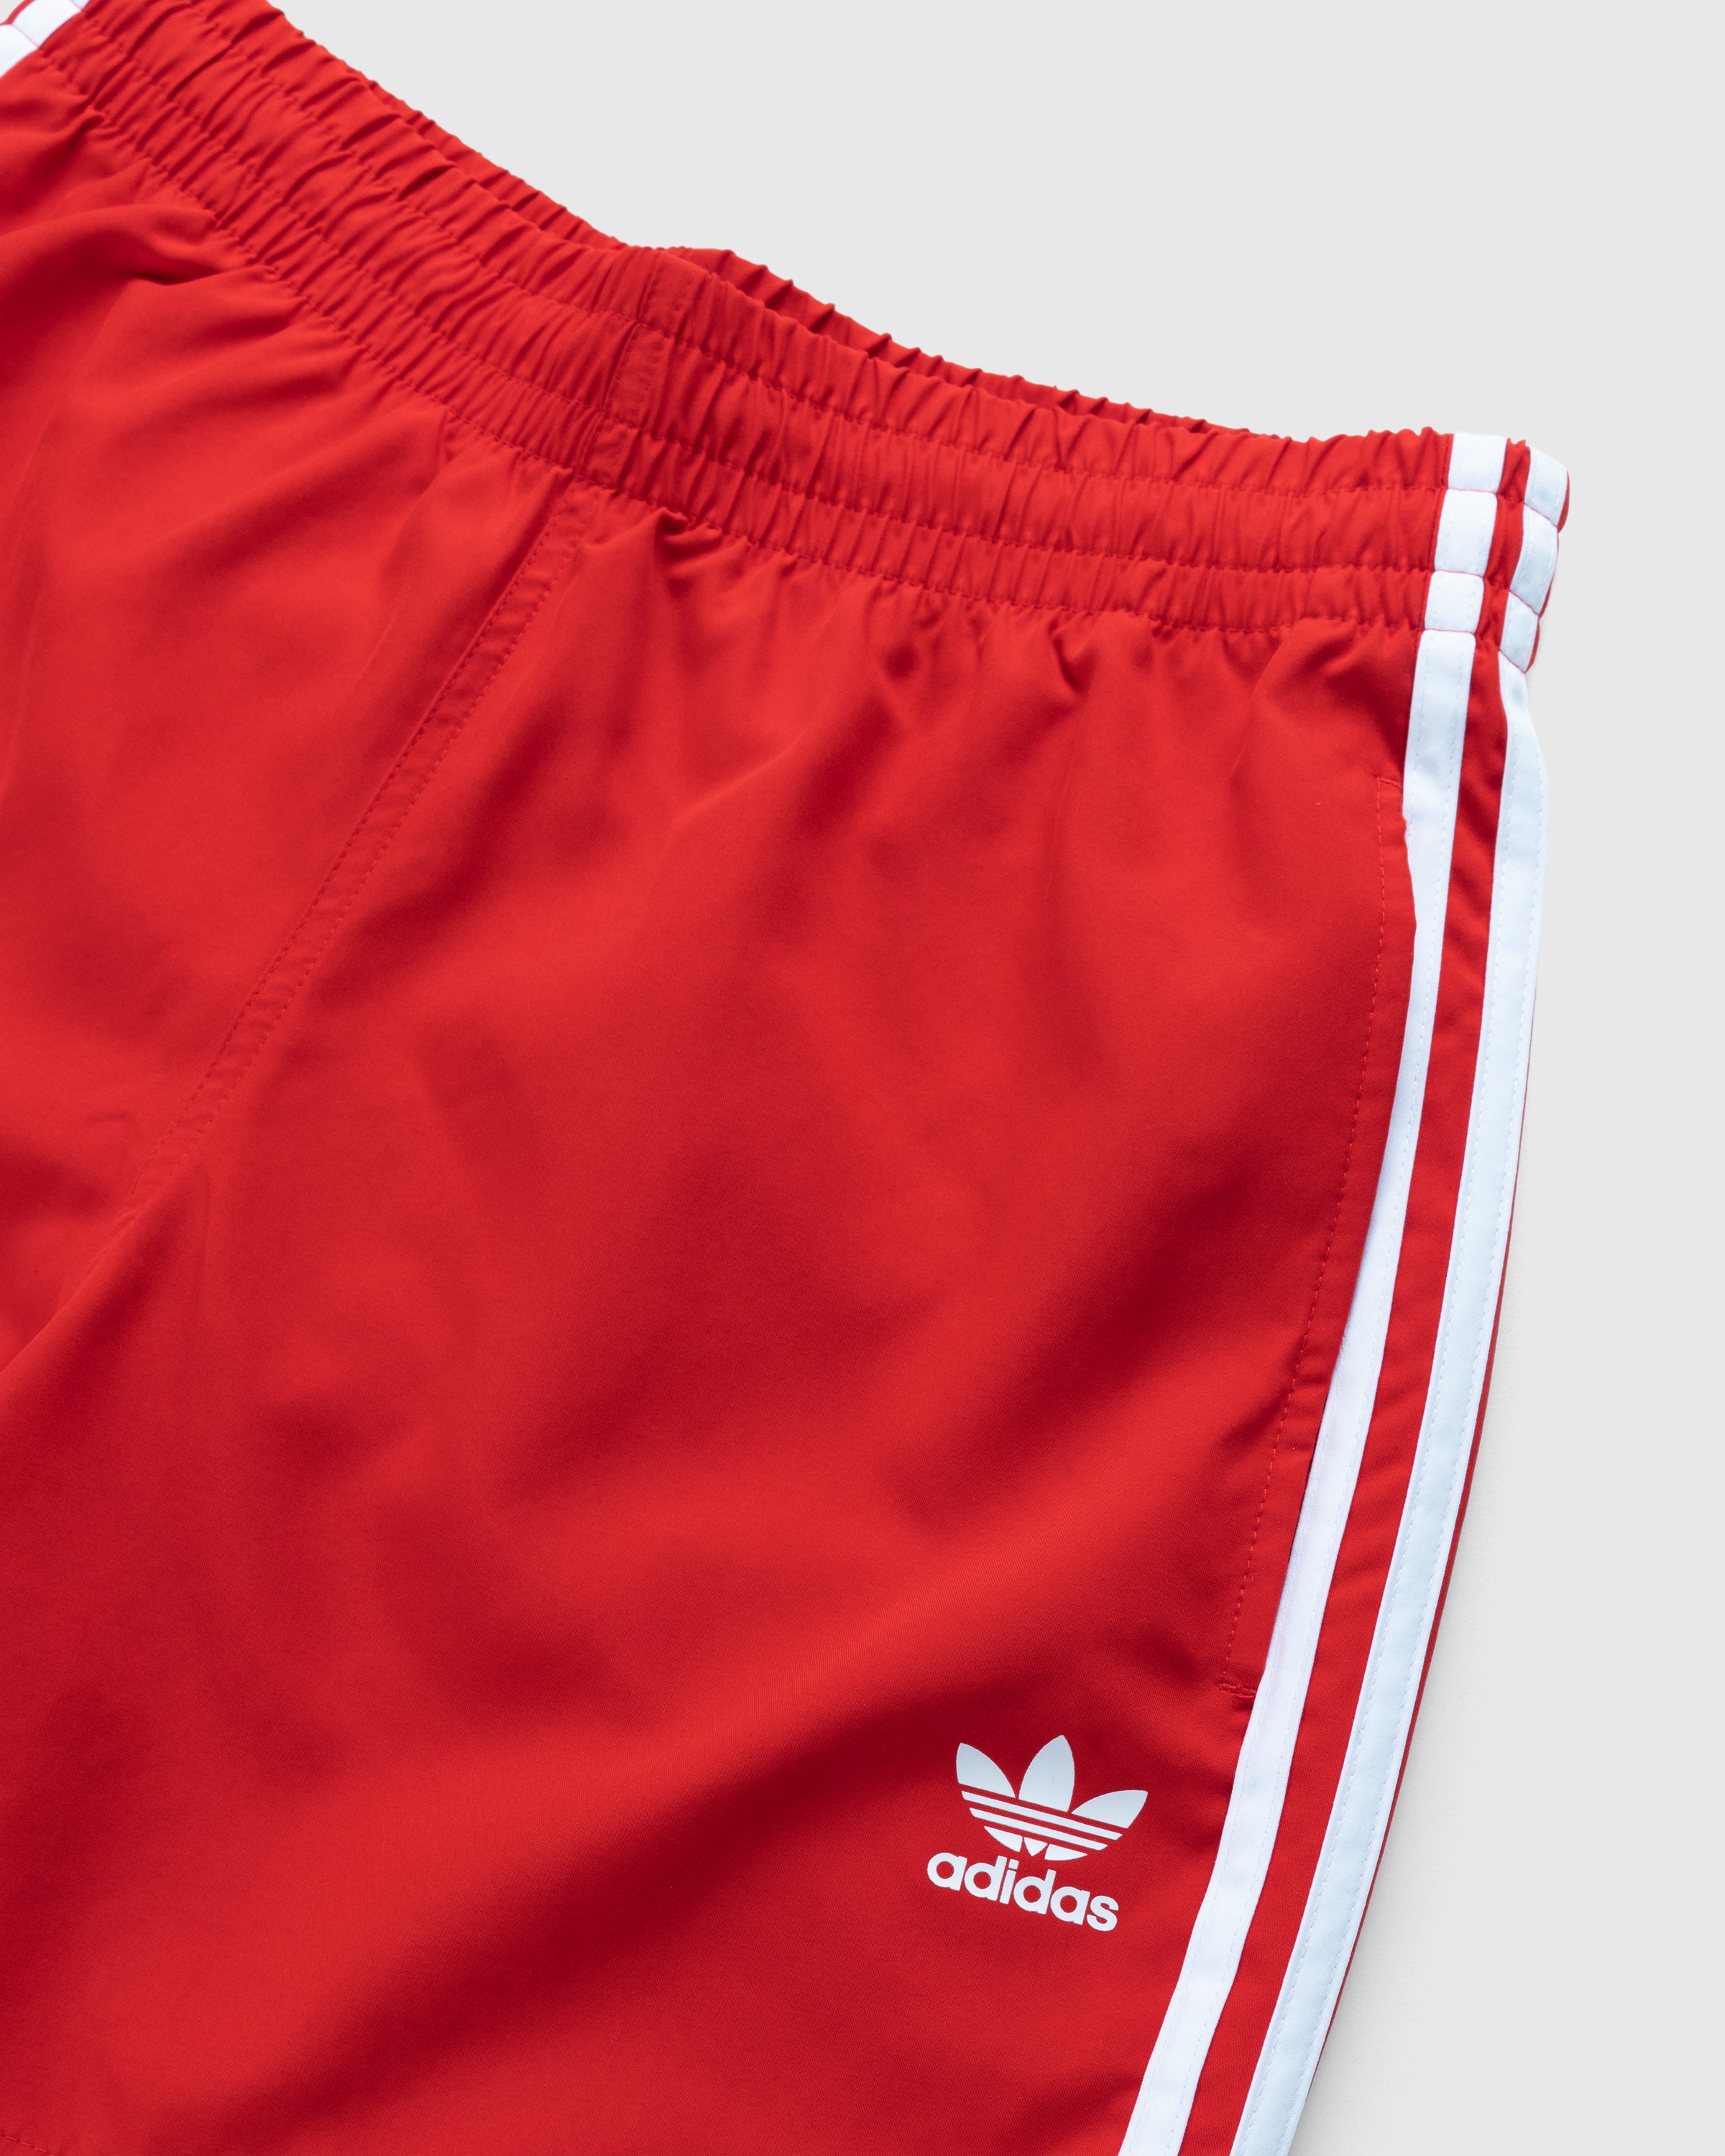 Adidas - Classic 3-Stripes Swim Shorts Vivid Red - Clothing - Red - Image 3